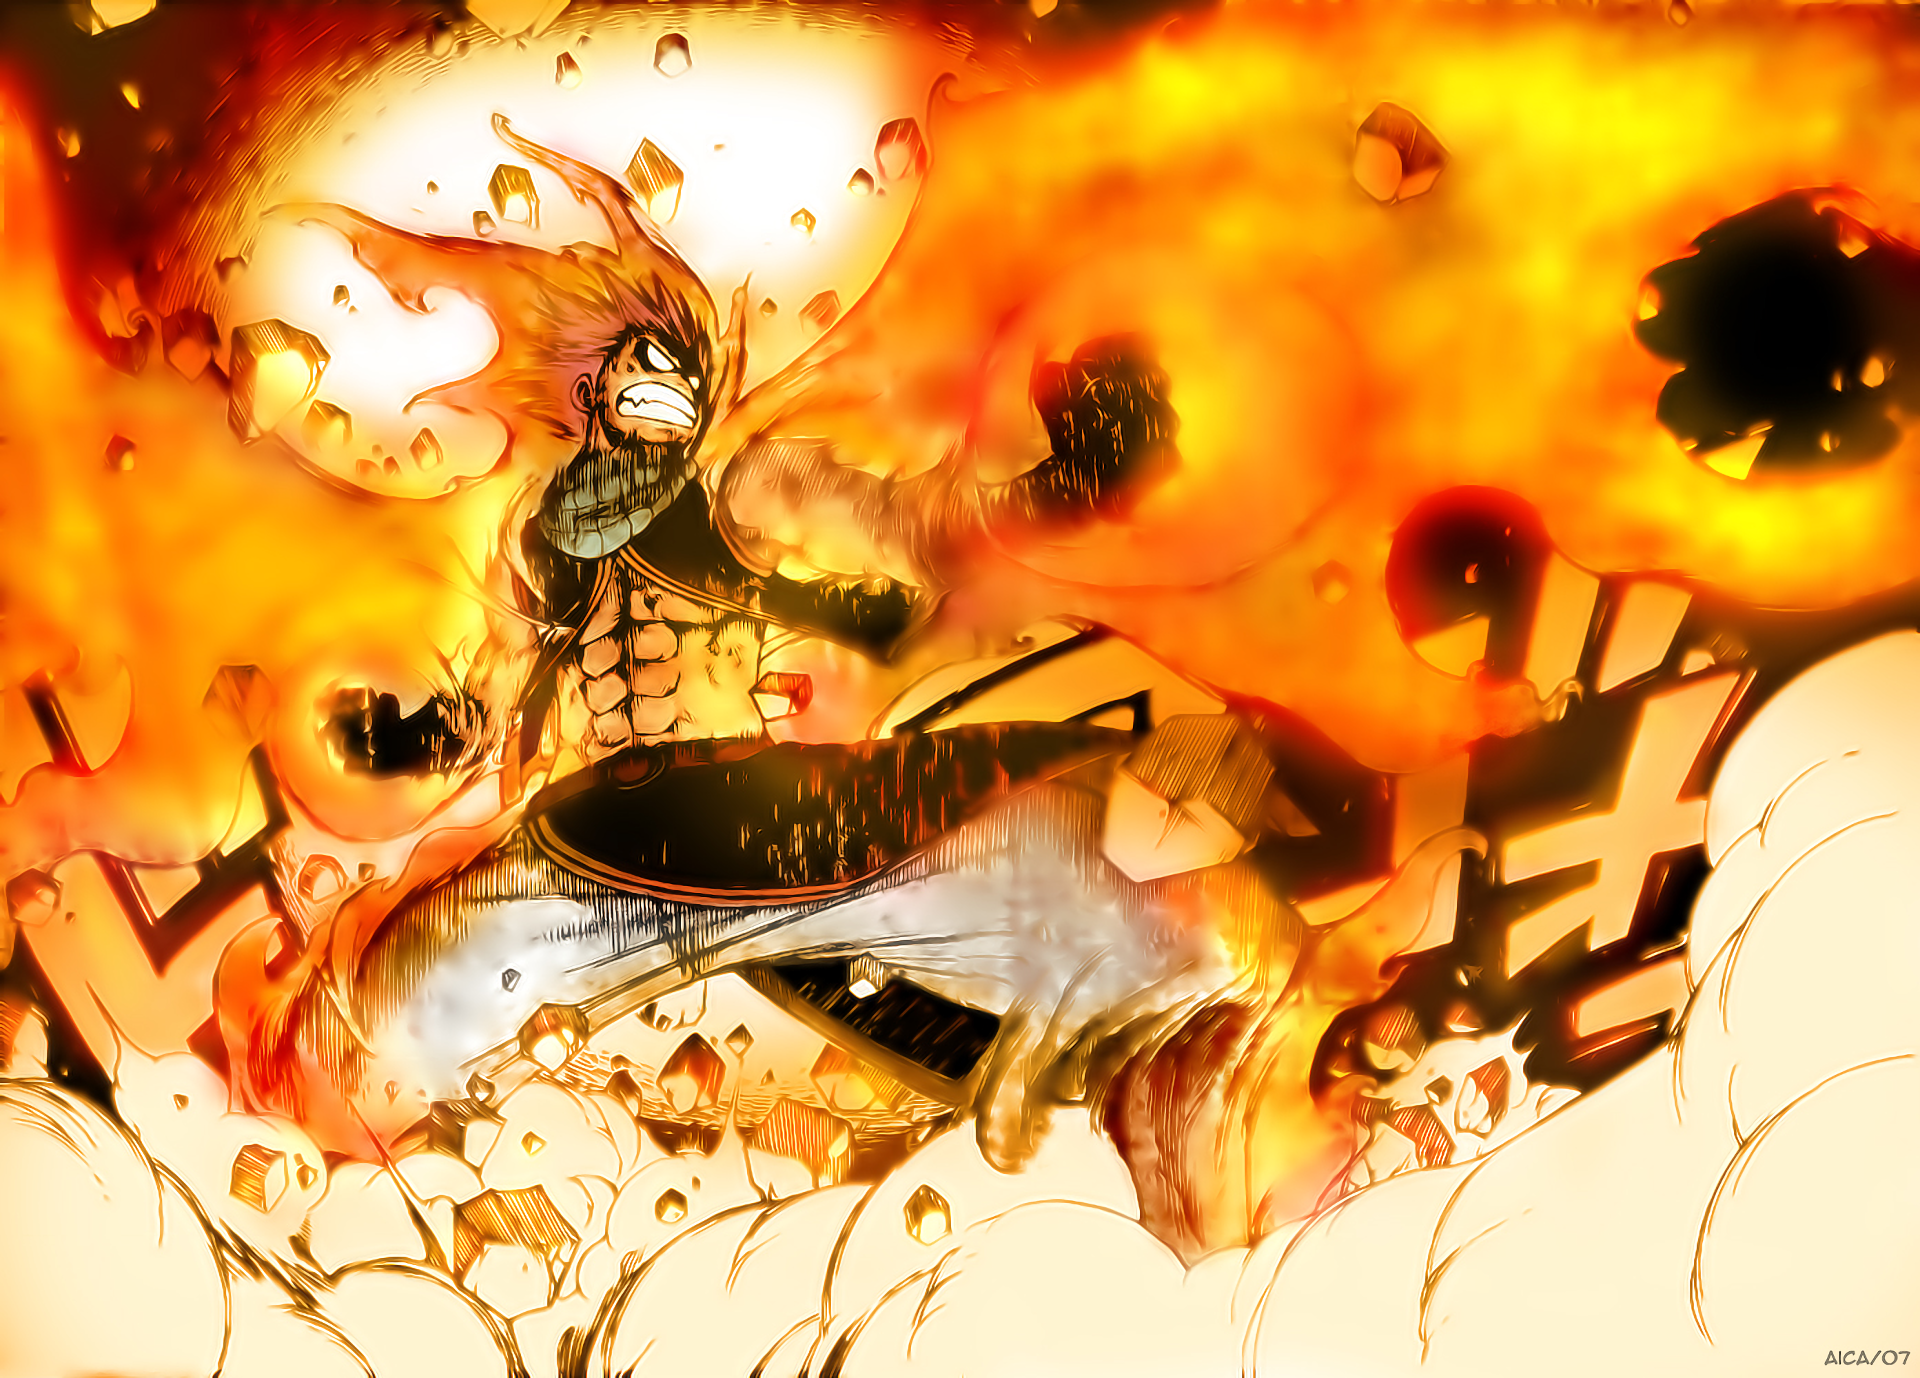 Natsu Dragneel engulfed in flames